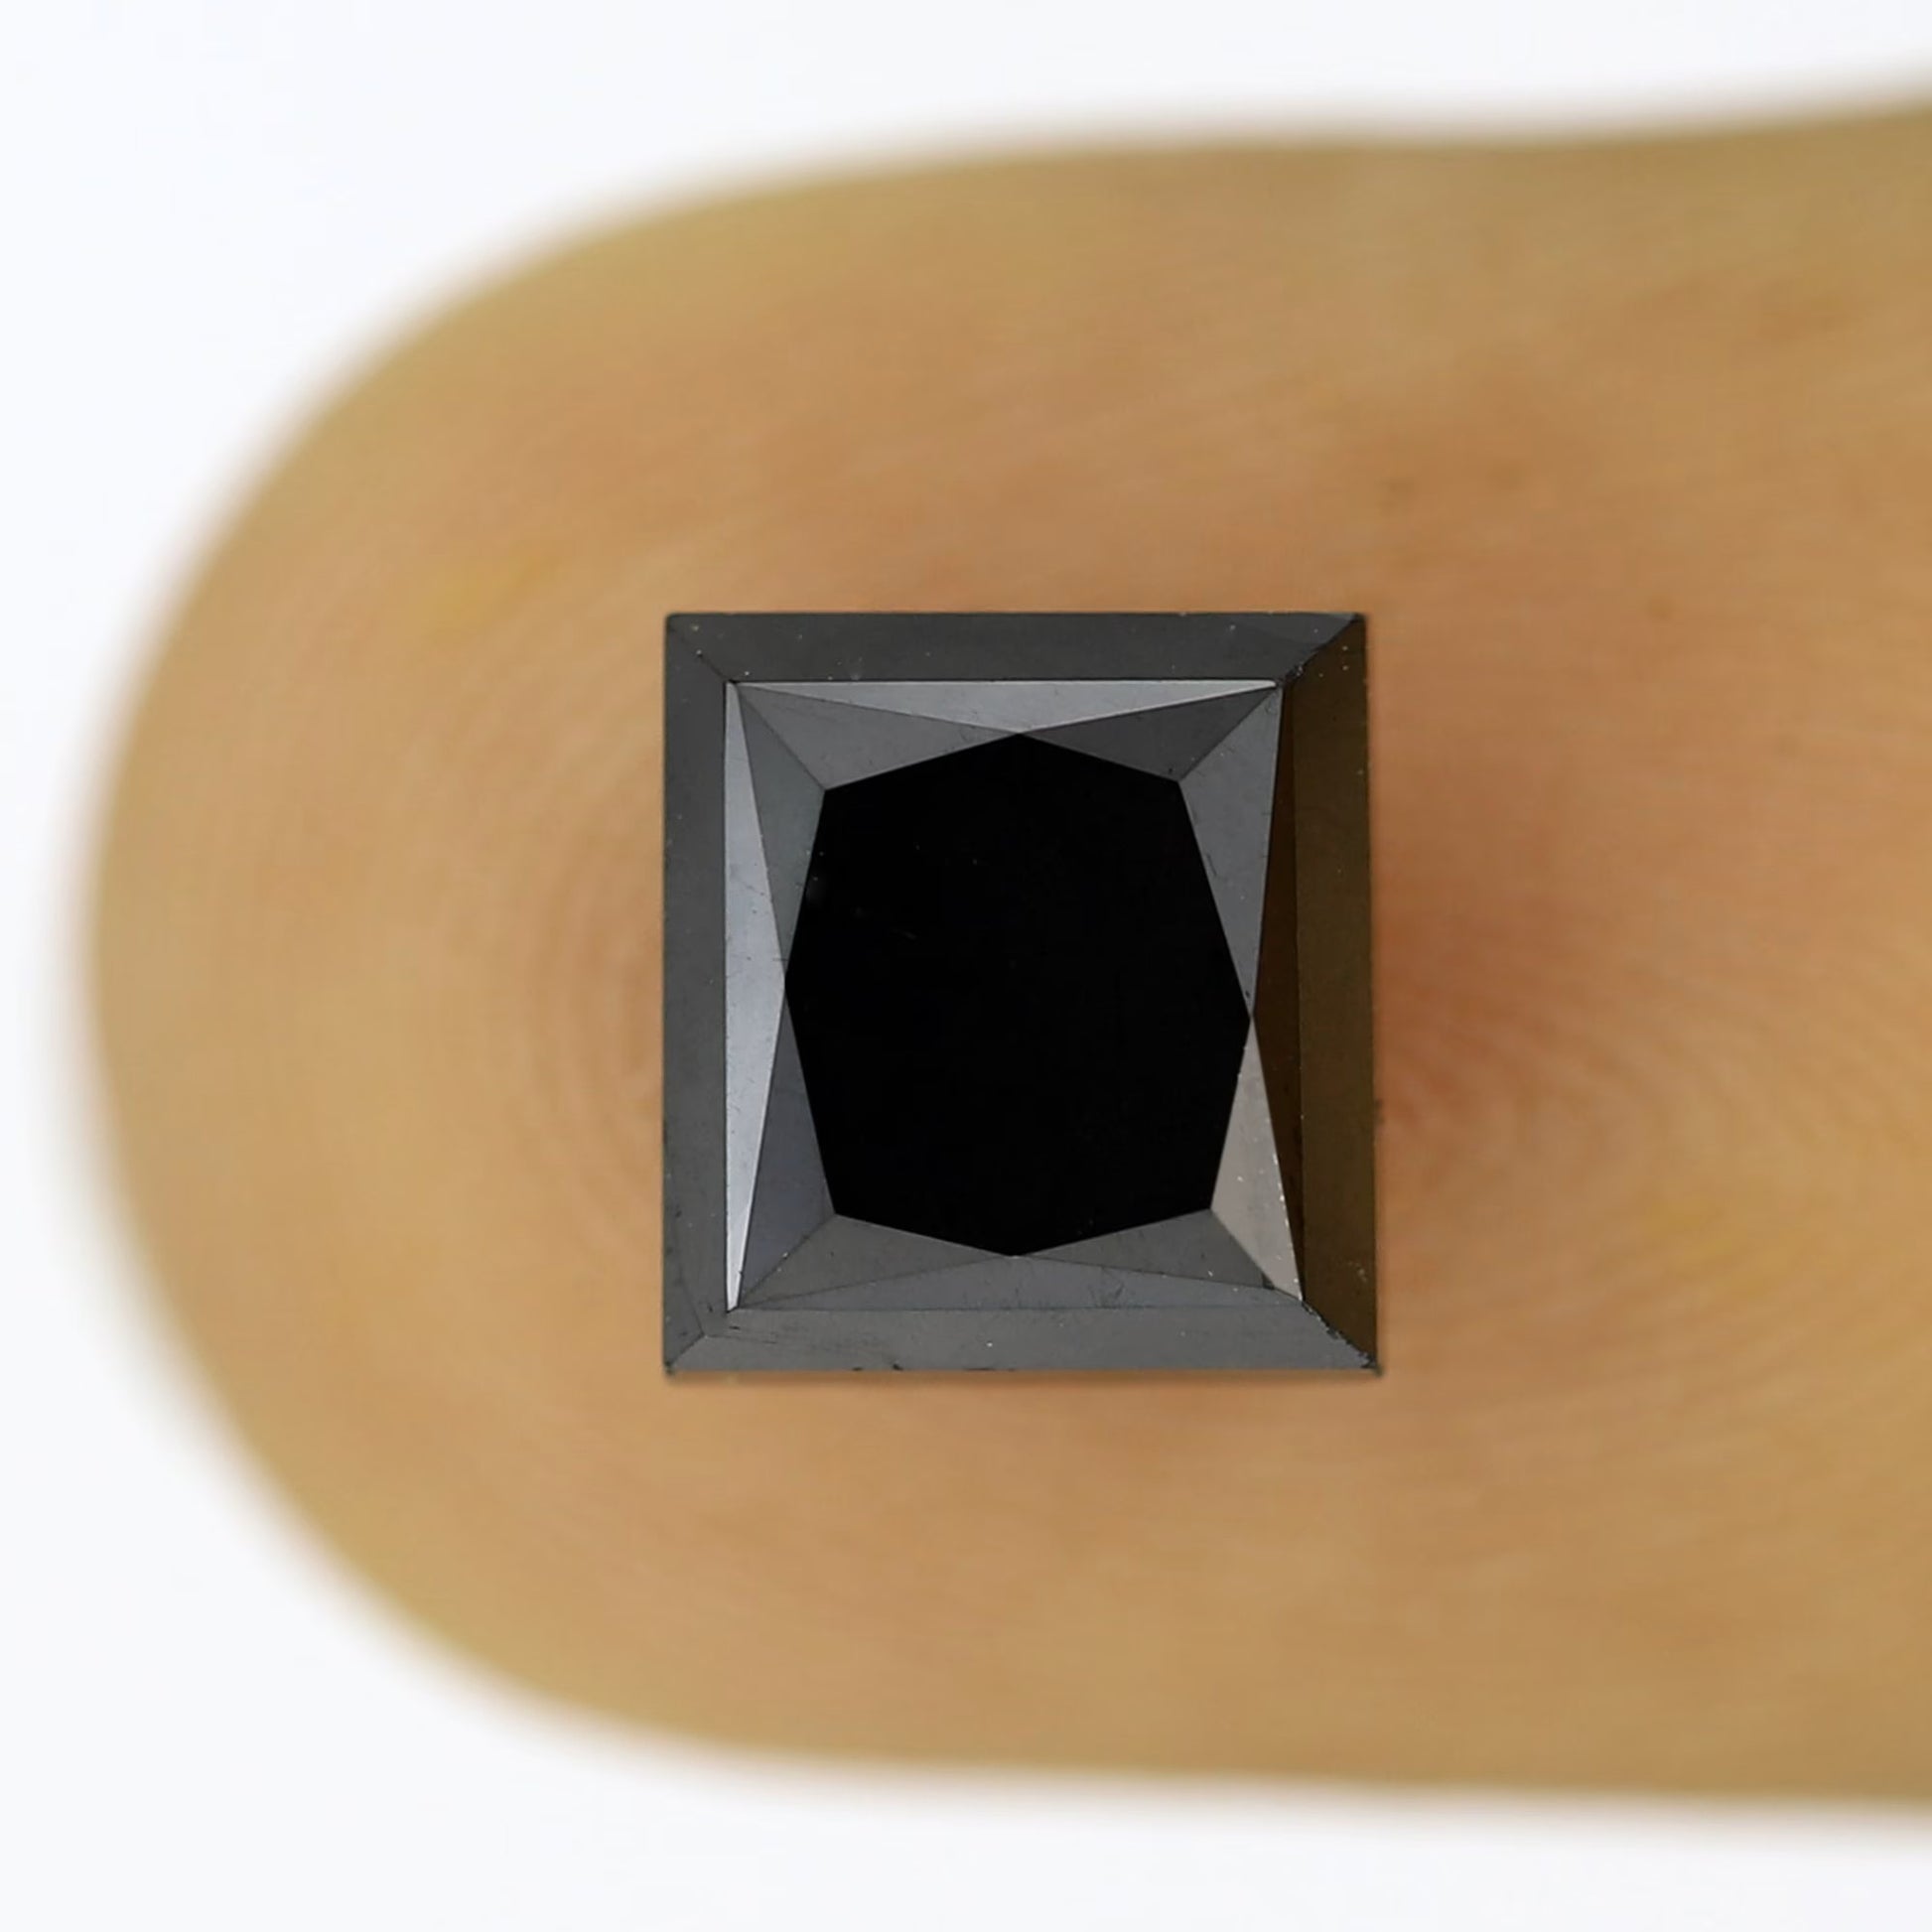 2 Carat Square Shape Rose Cut Black Diamond For Engagement Ring At Wholesale Price - Blackdiamond